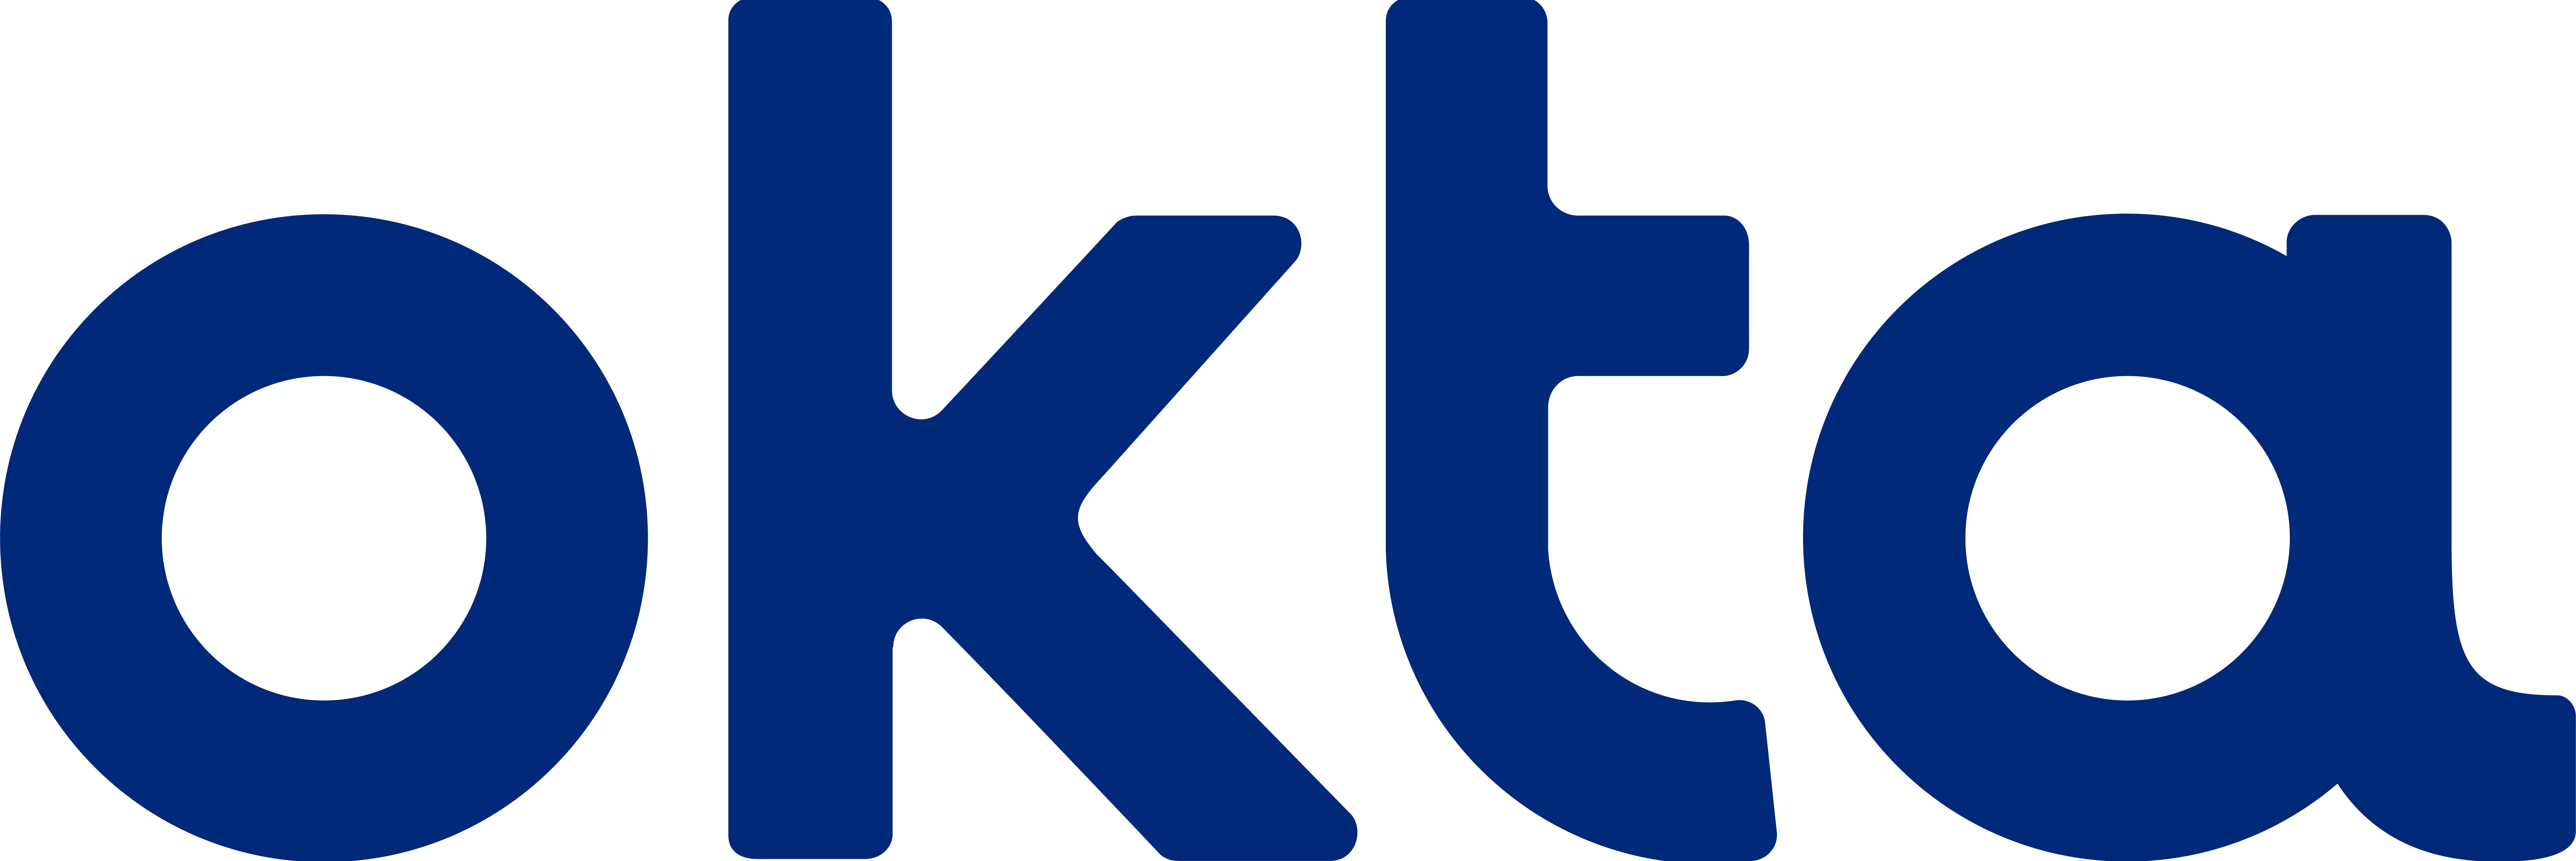 Okta, Inc. Logo-01.jpg